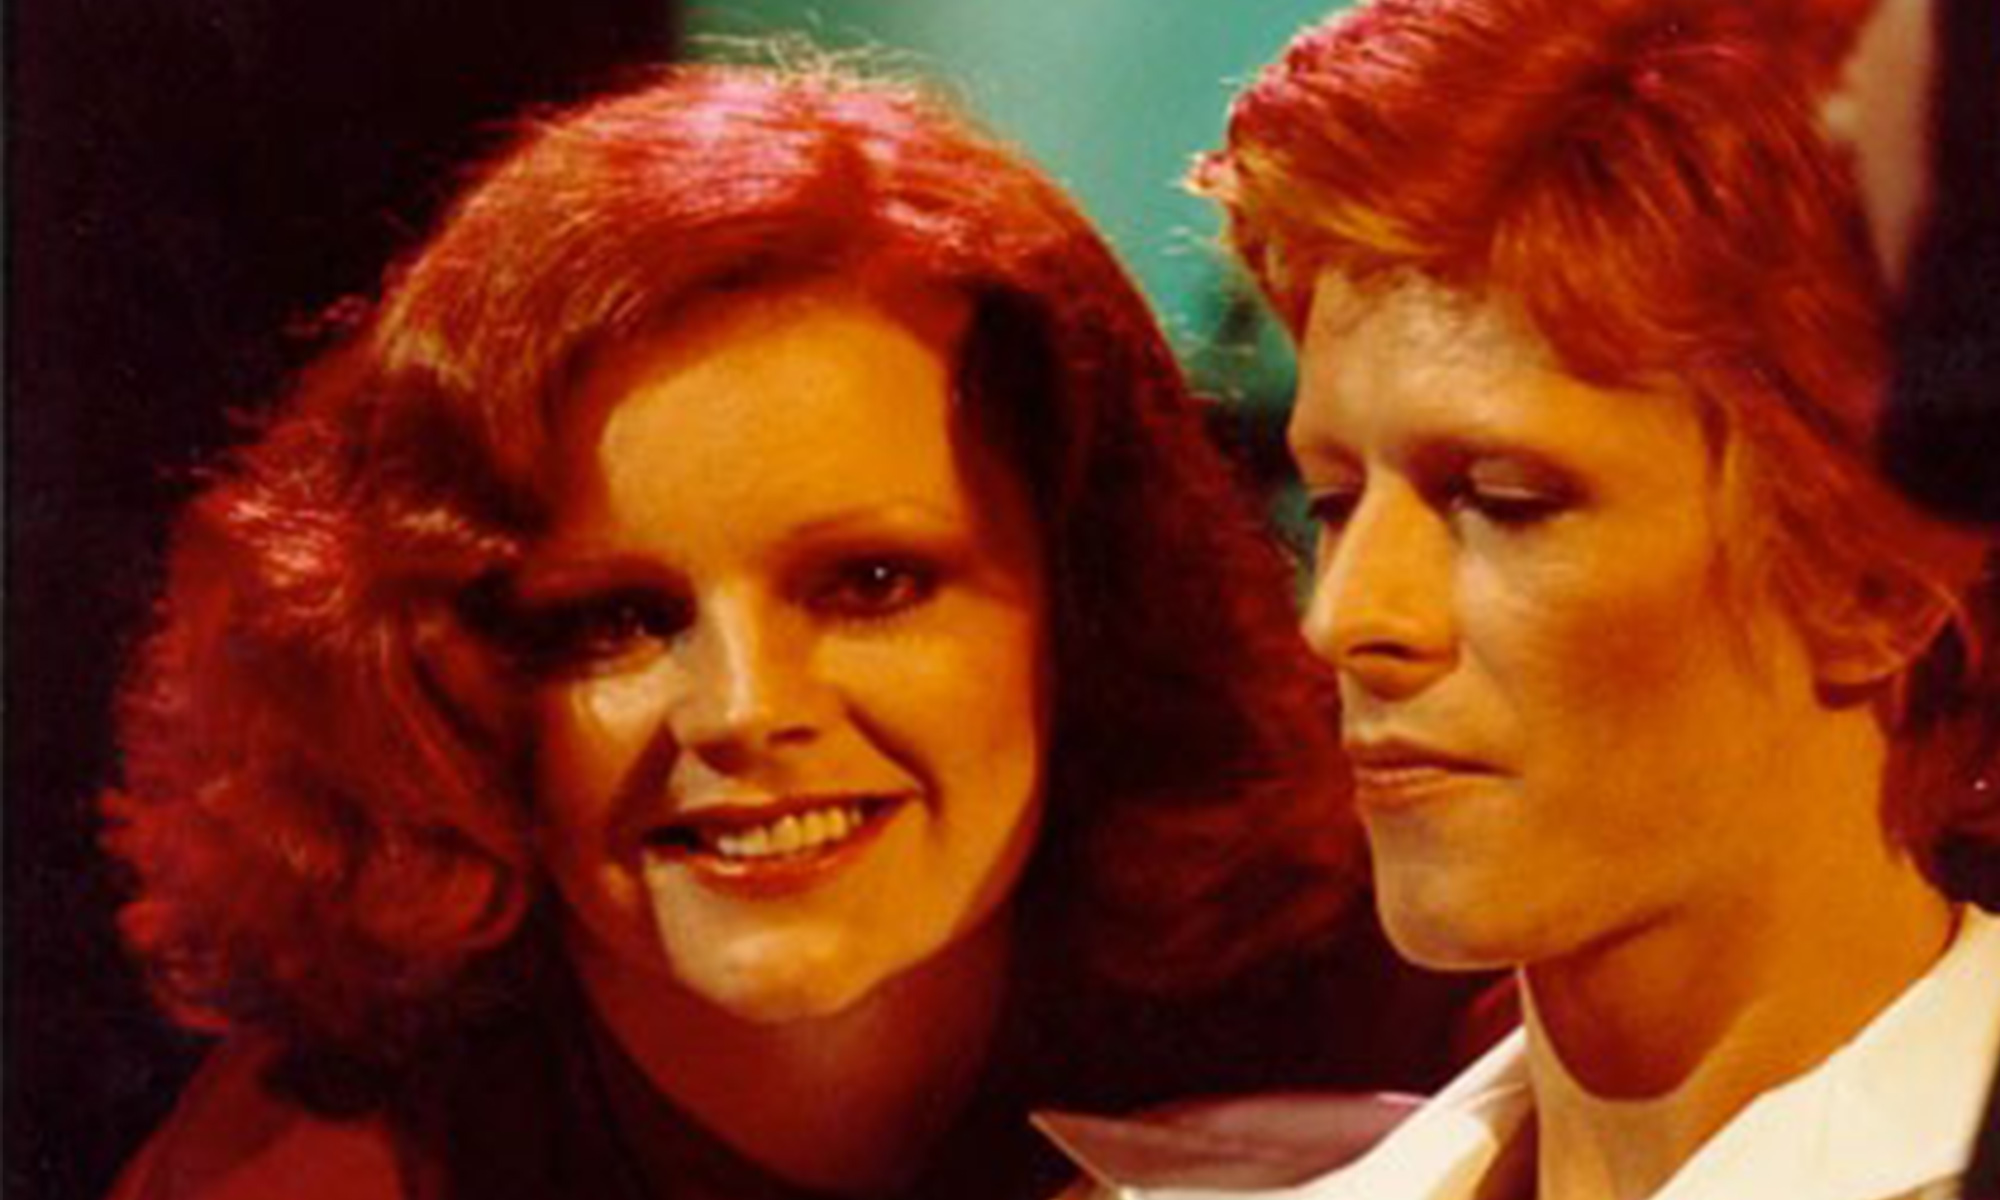 Cherry y David Bowie